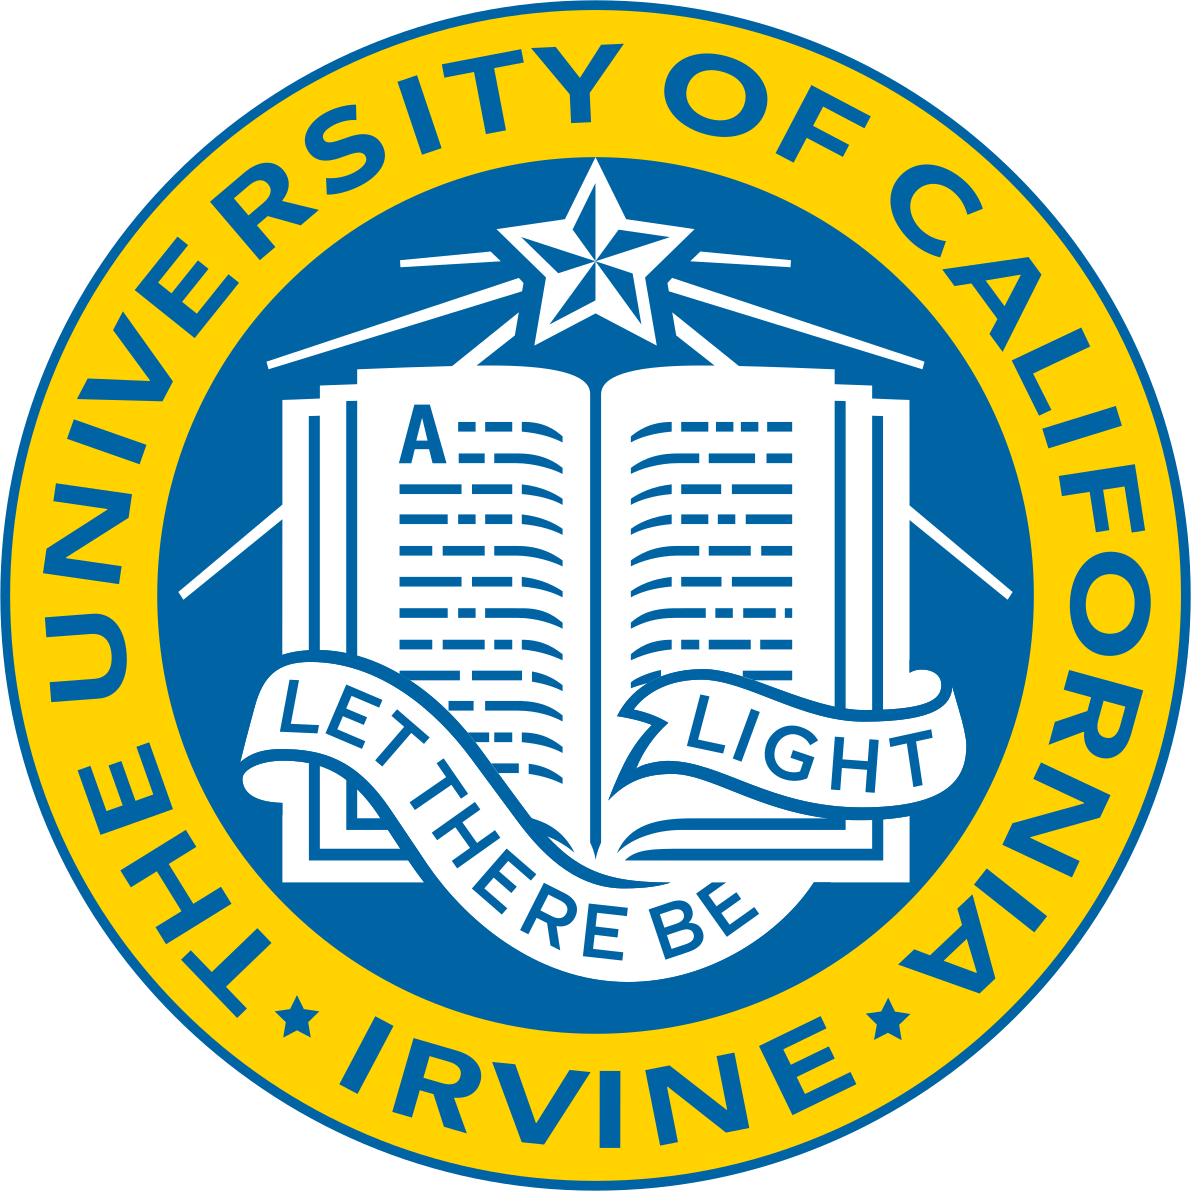 University of California-Irvine